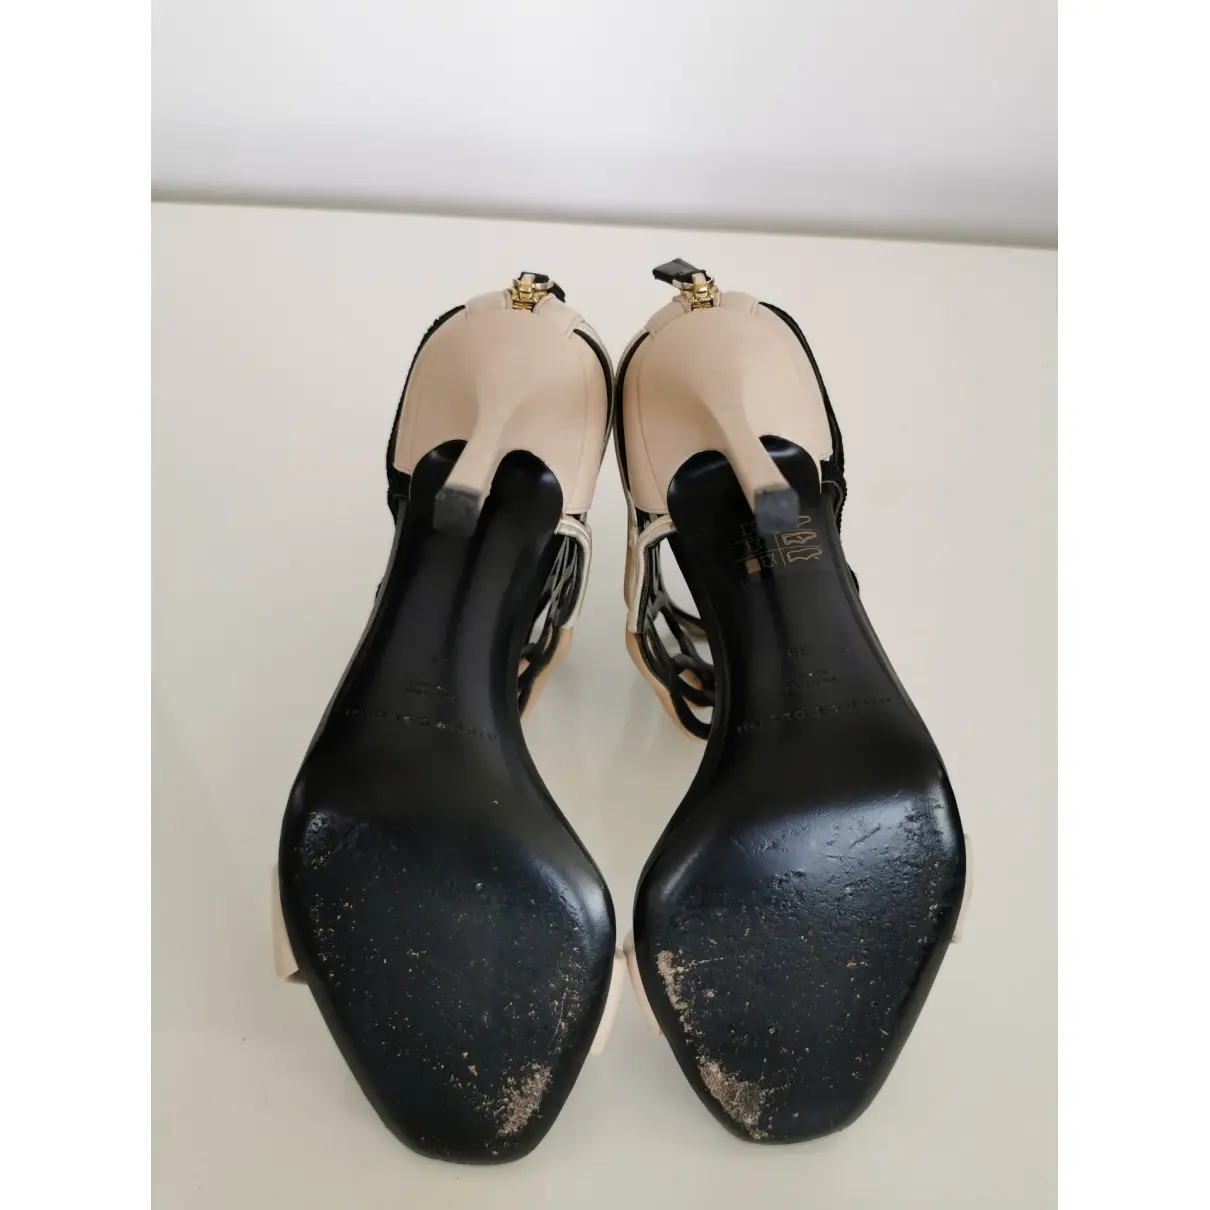 Buy Diego Dolcini Leather heels online